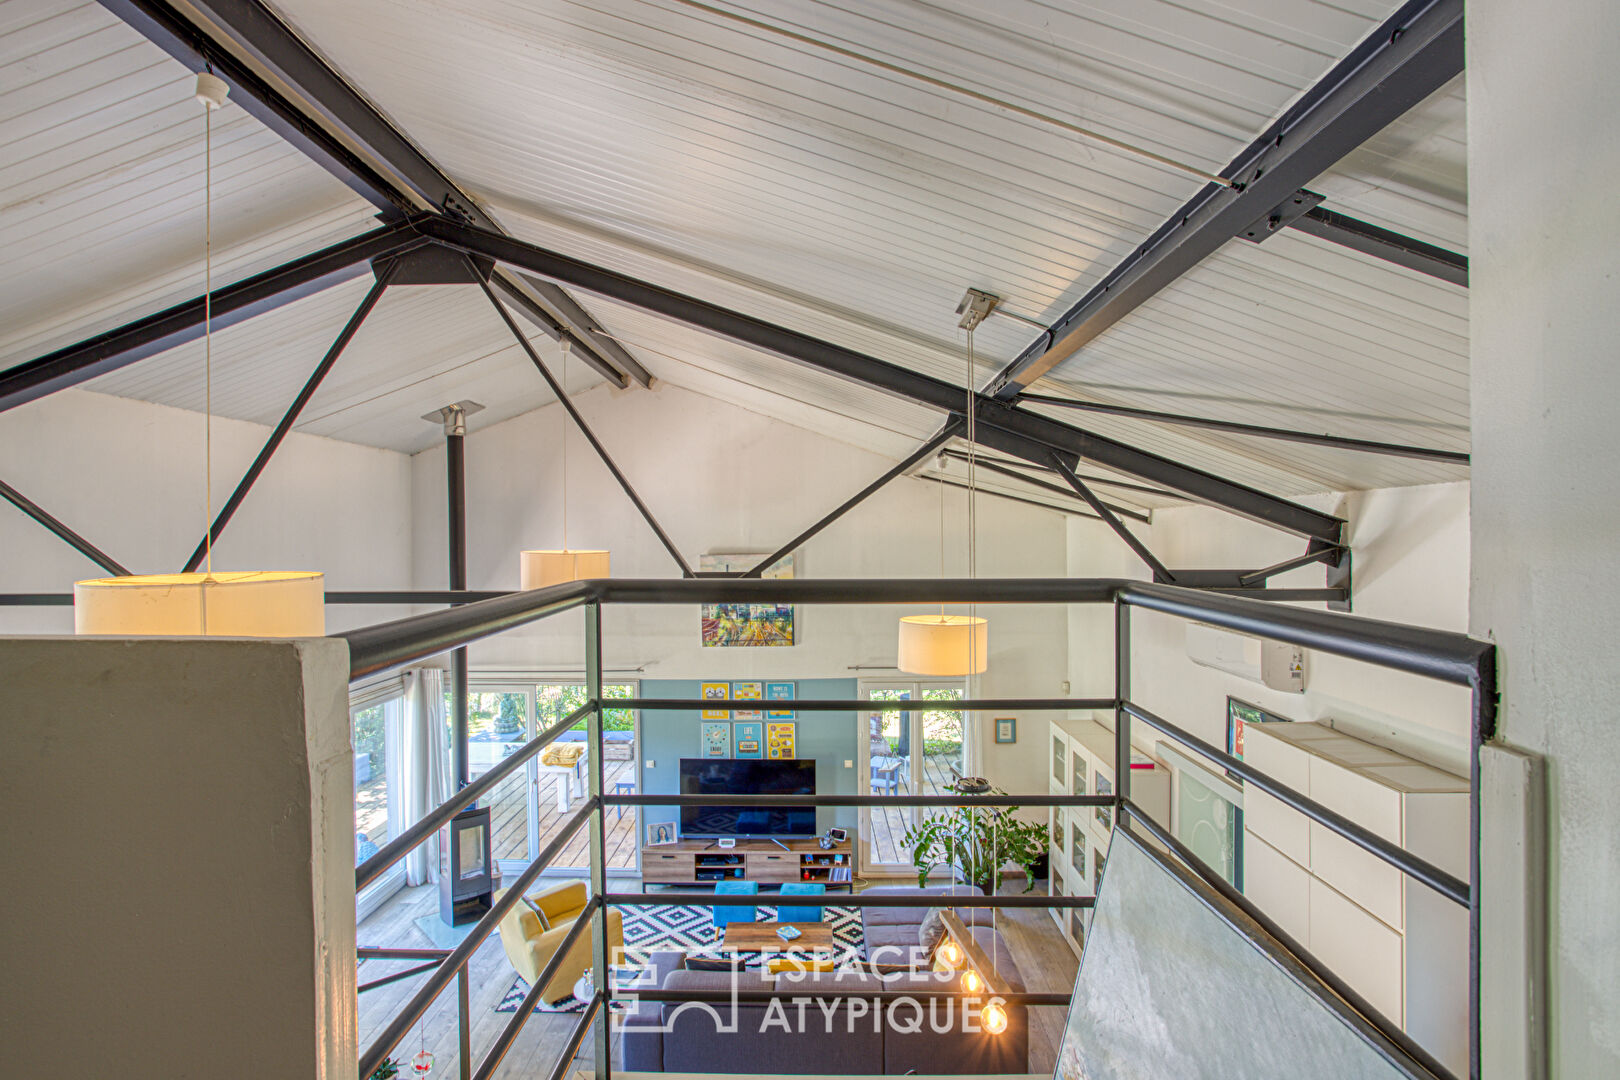 Architect-designed house with a loft spirit